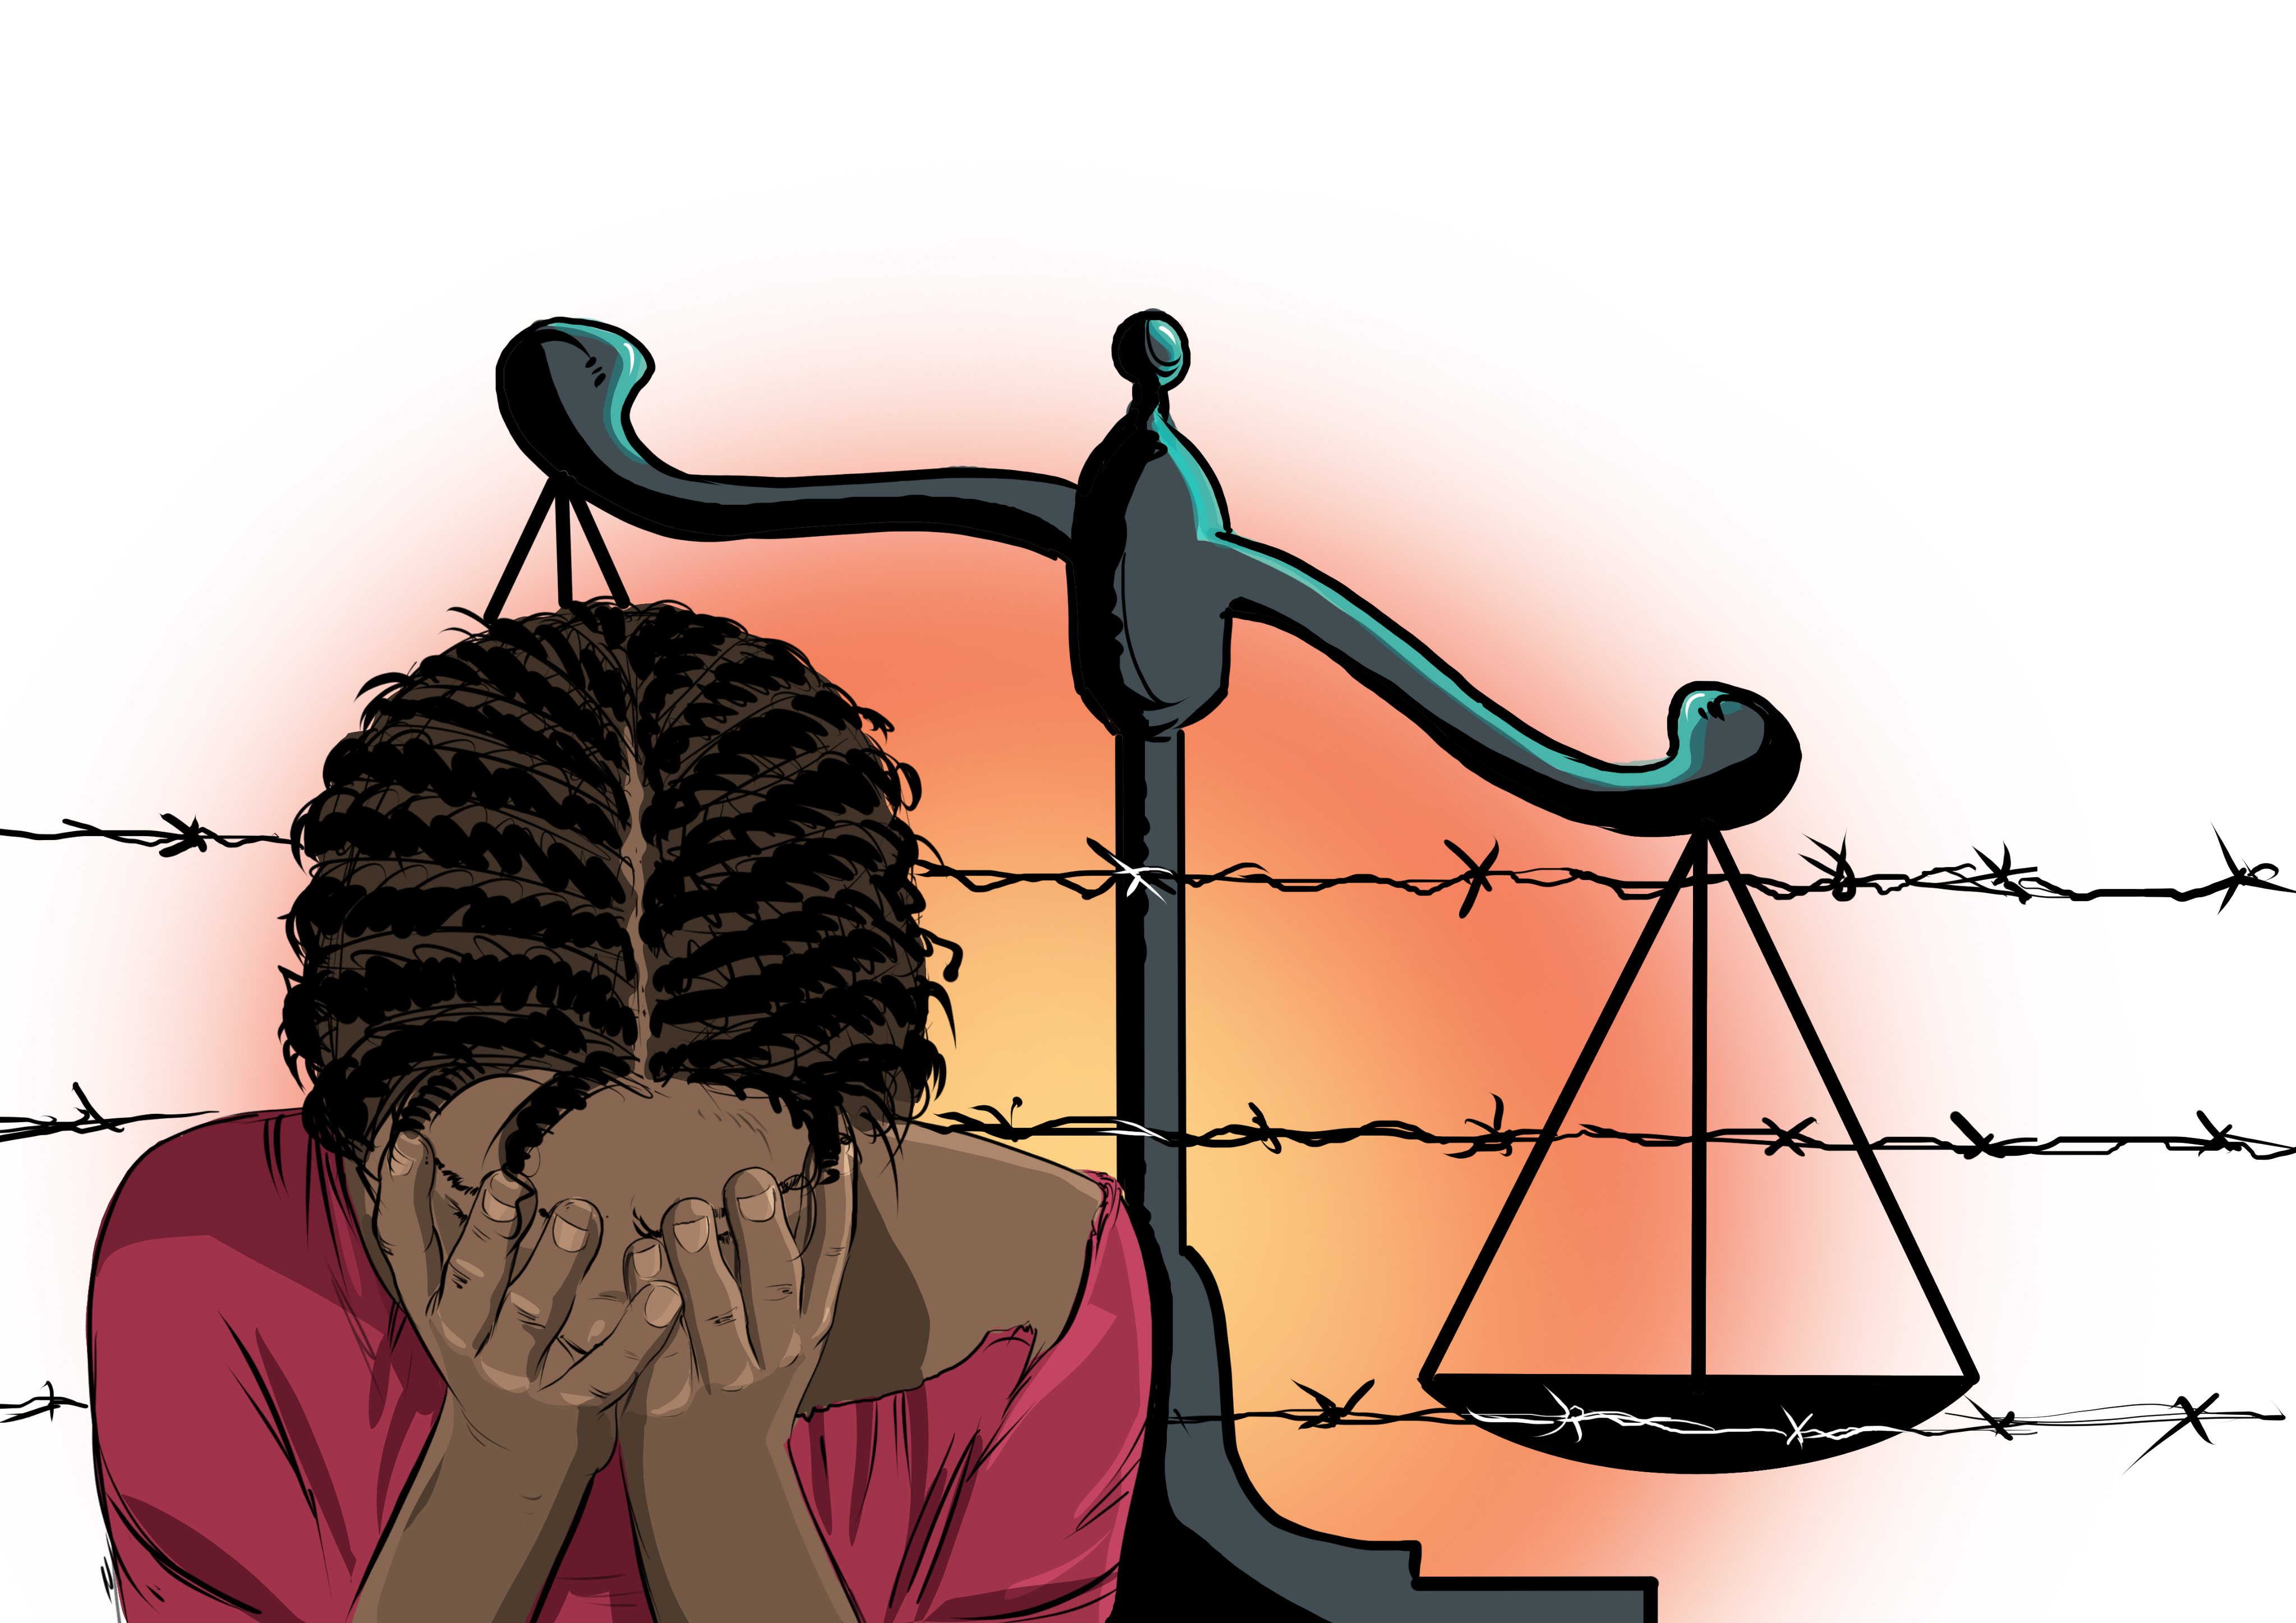 Pornsex Raping - Nigeria: Failure to tackle rape crisis emboldens perpetrators and silences  survivors - Amnesty International